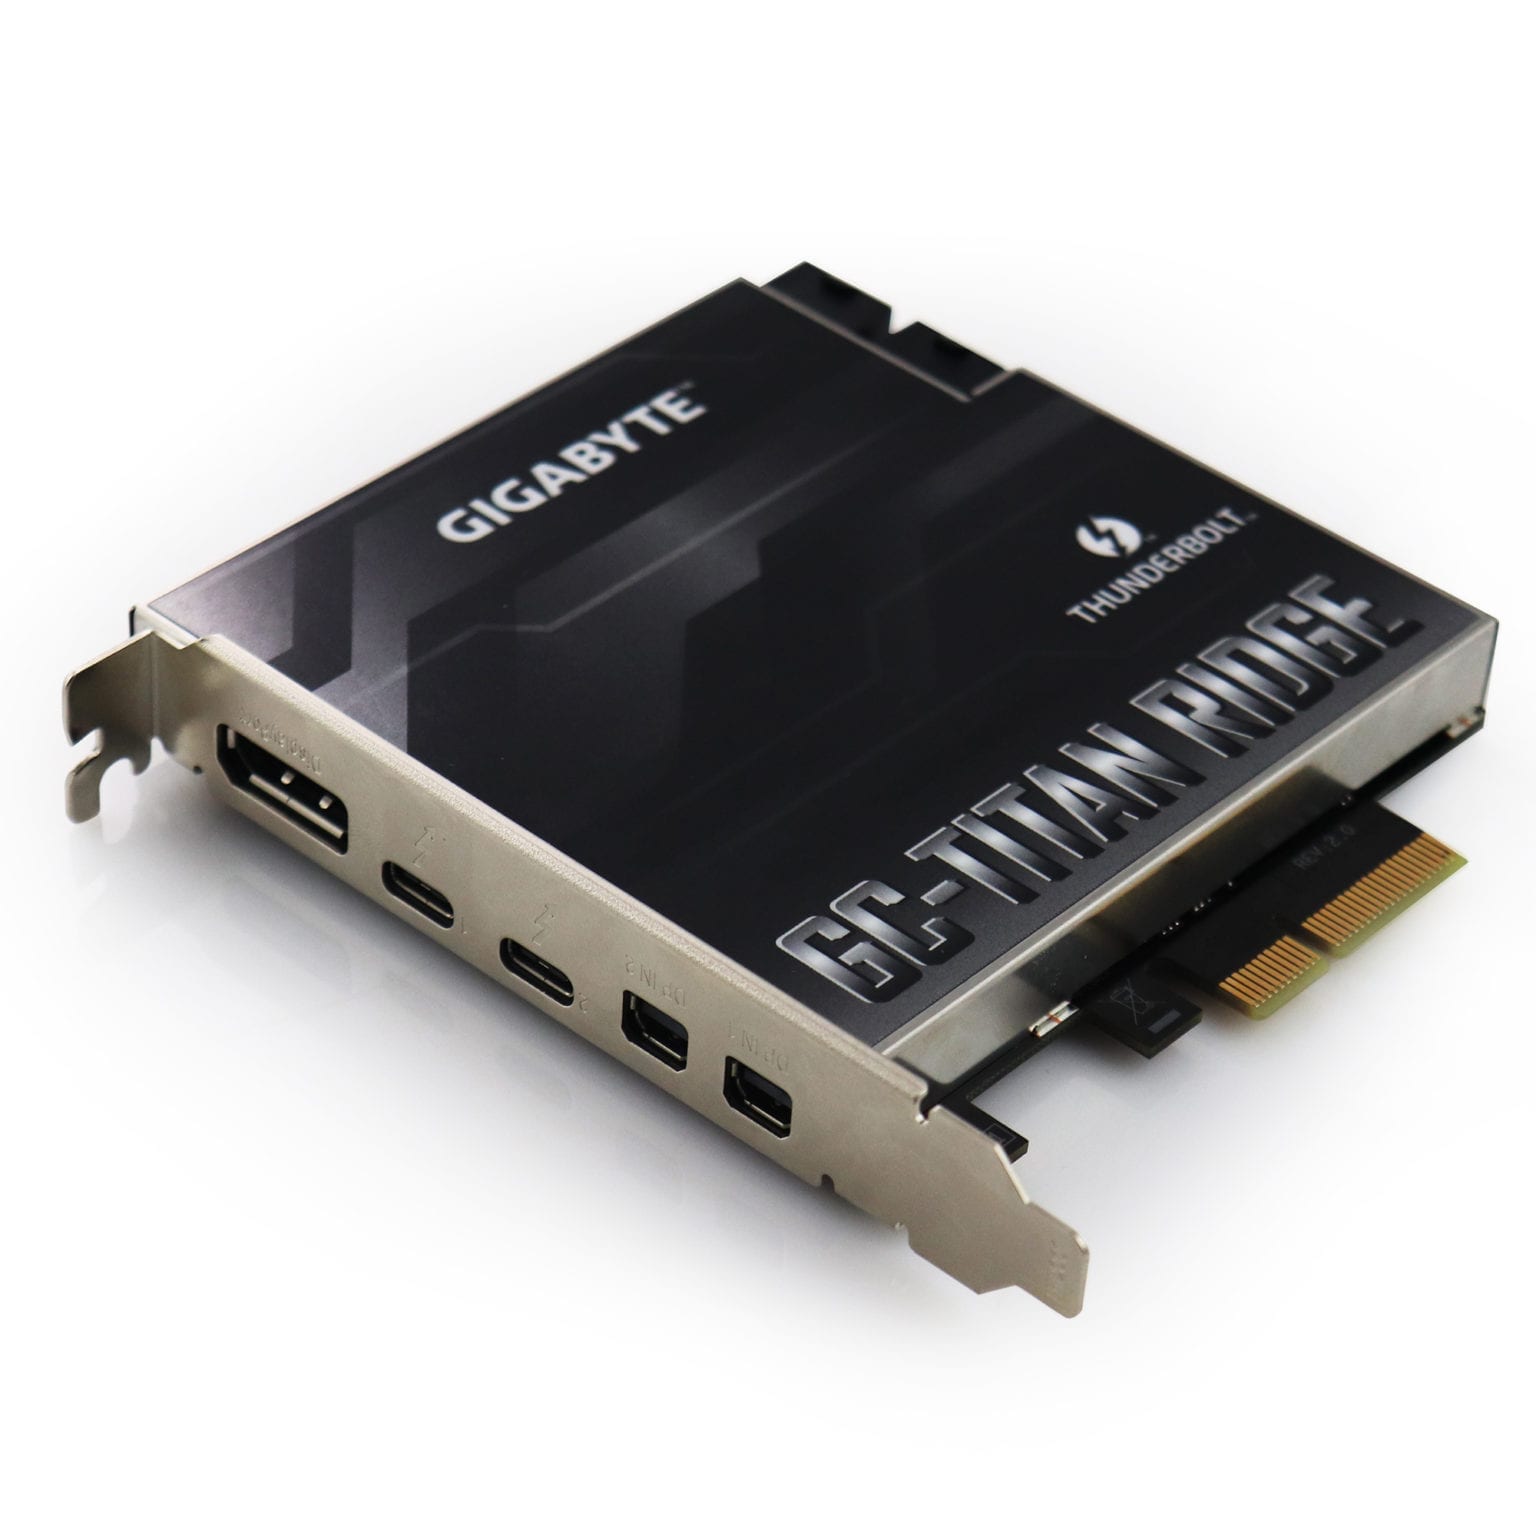 Titan Ridge Thunderbolt 3 PCI-e Card for Mac - MacFinder - Certified